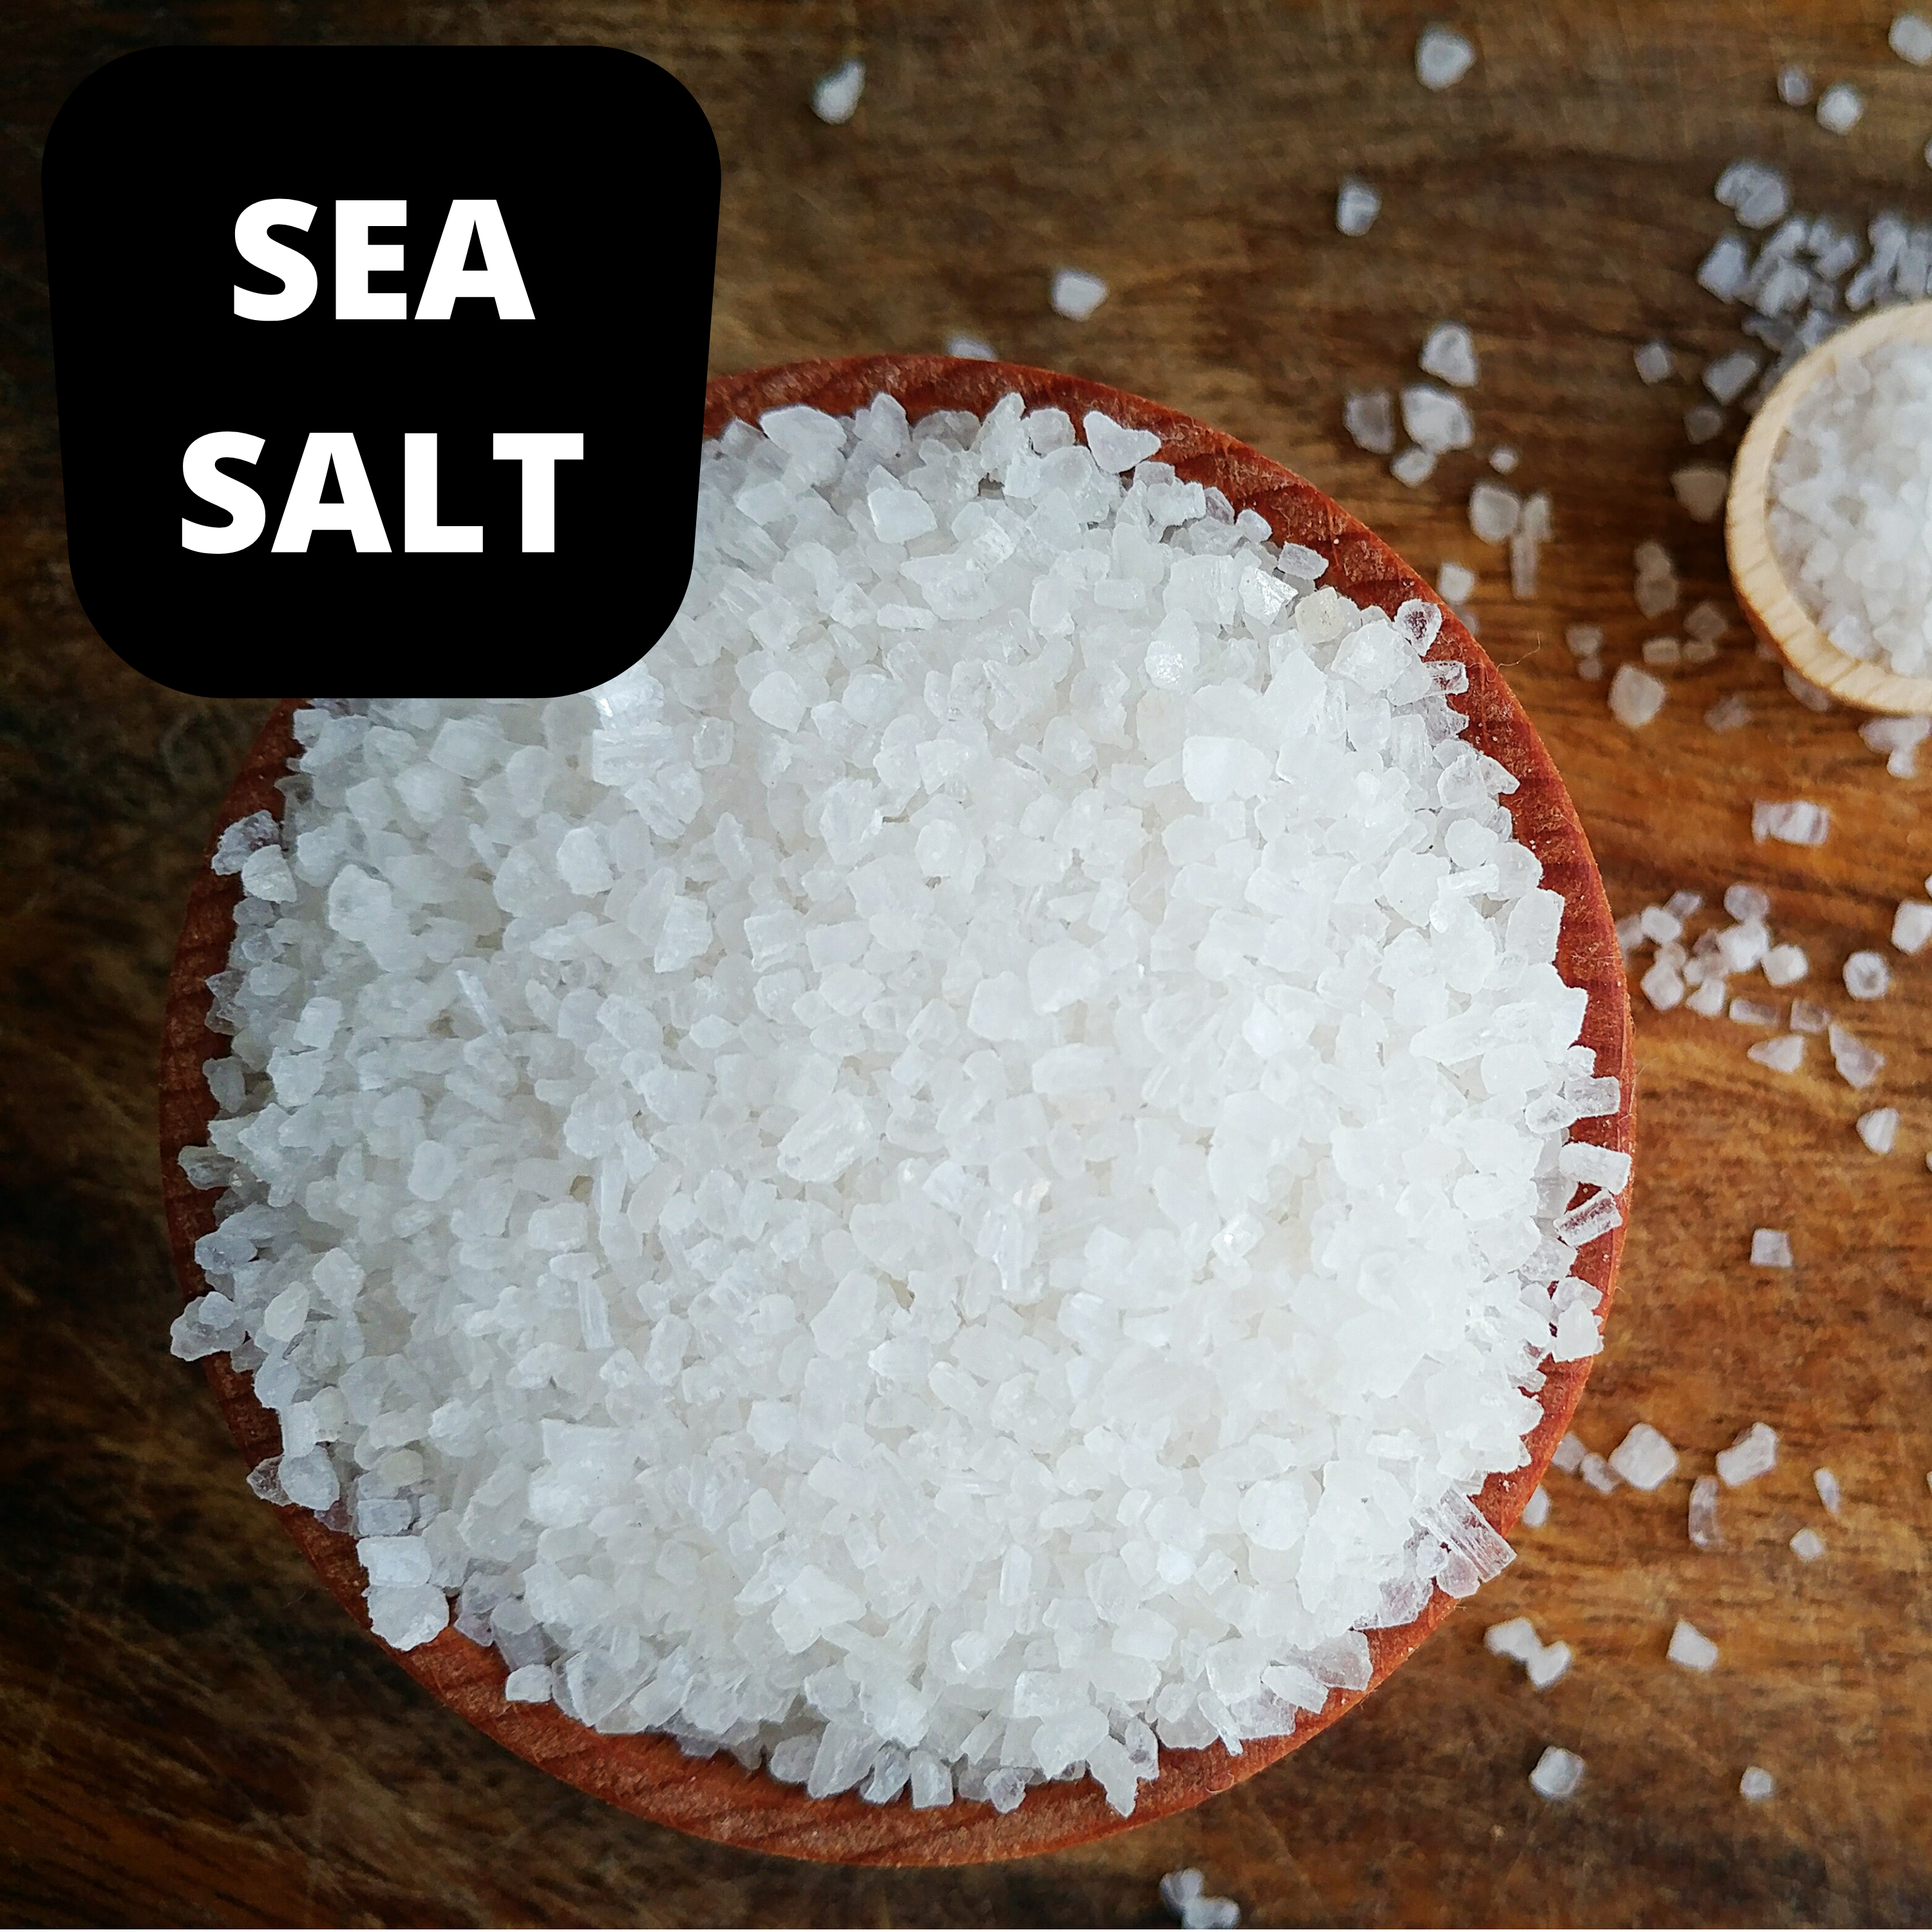 Paydens Cobalt Cedarwood & Citrus Scented Sea Salt Bath Soak For Men